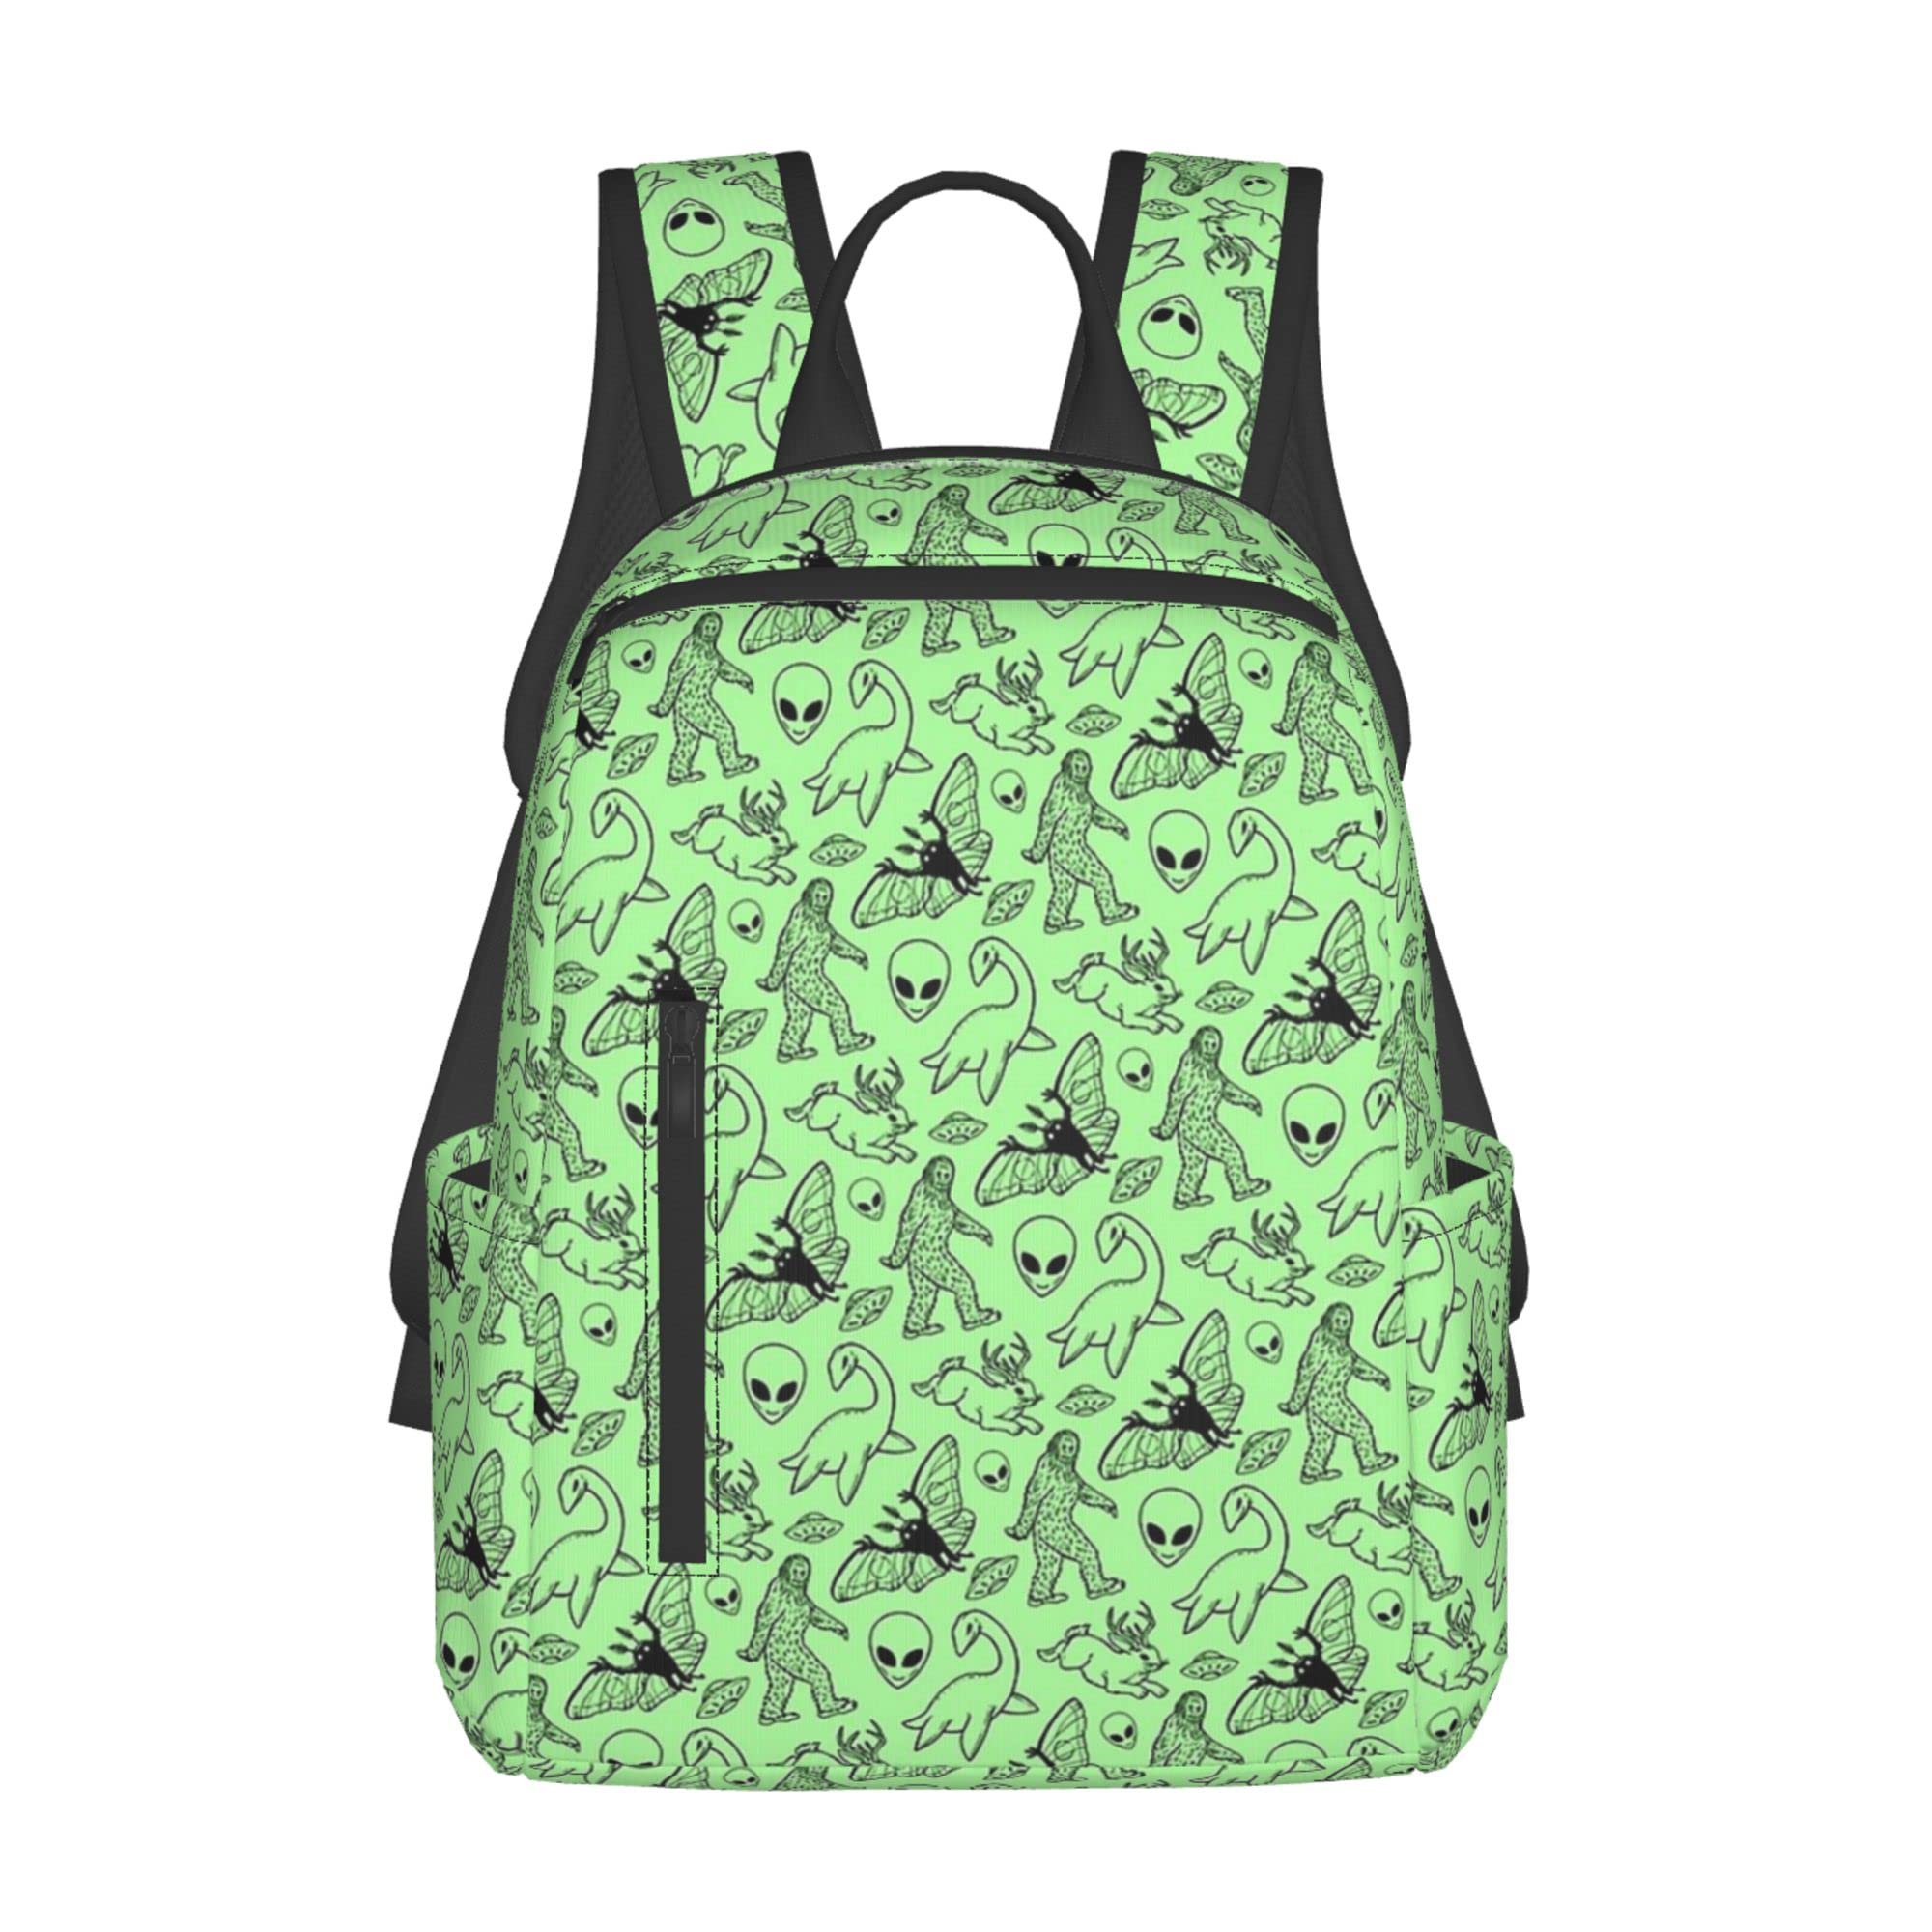 SWEET TANG Backpack Travel, Work Bookbag Aliens Savage Dinosaurs Green Casual Daypacks with Water Bottle Pocket